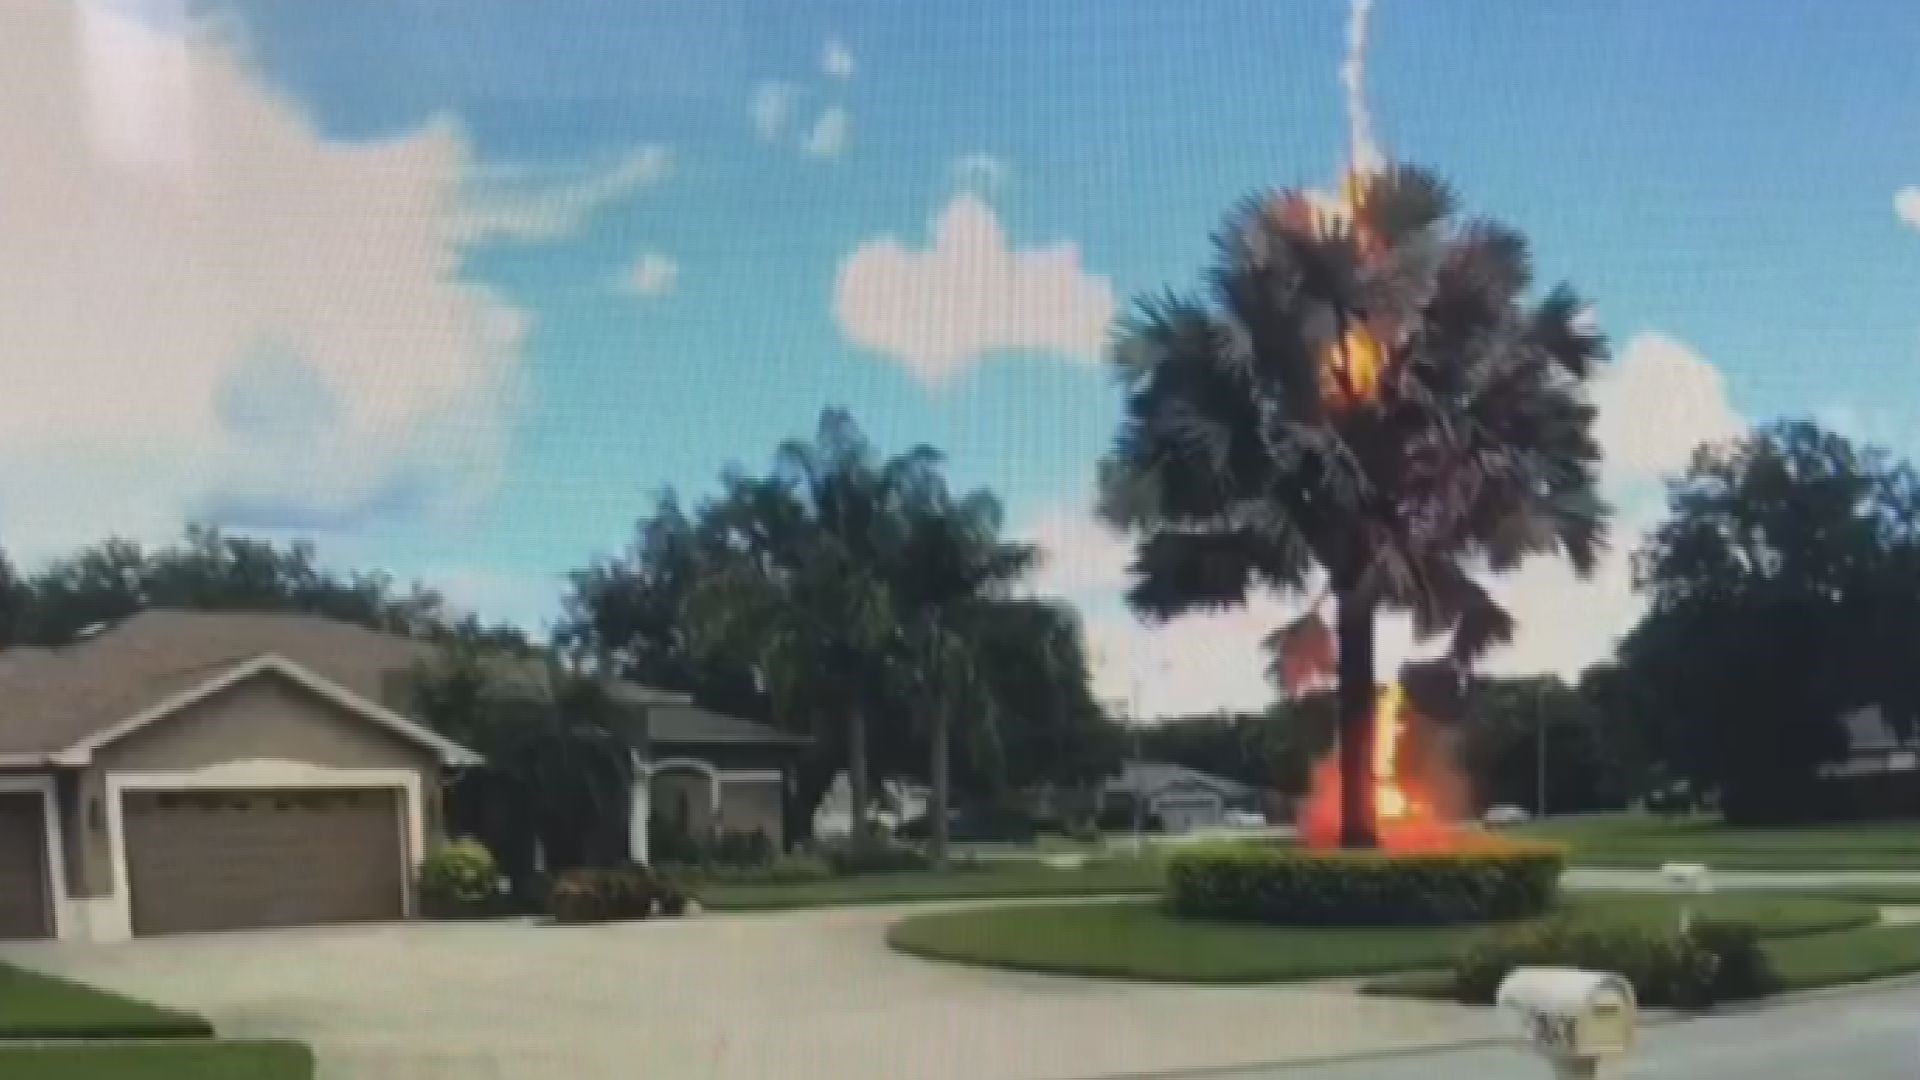 Video shows lightning bolt hitting tree in Florida neighborhood 